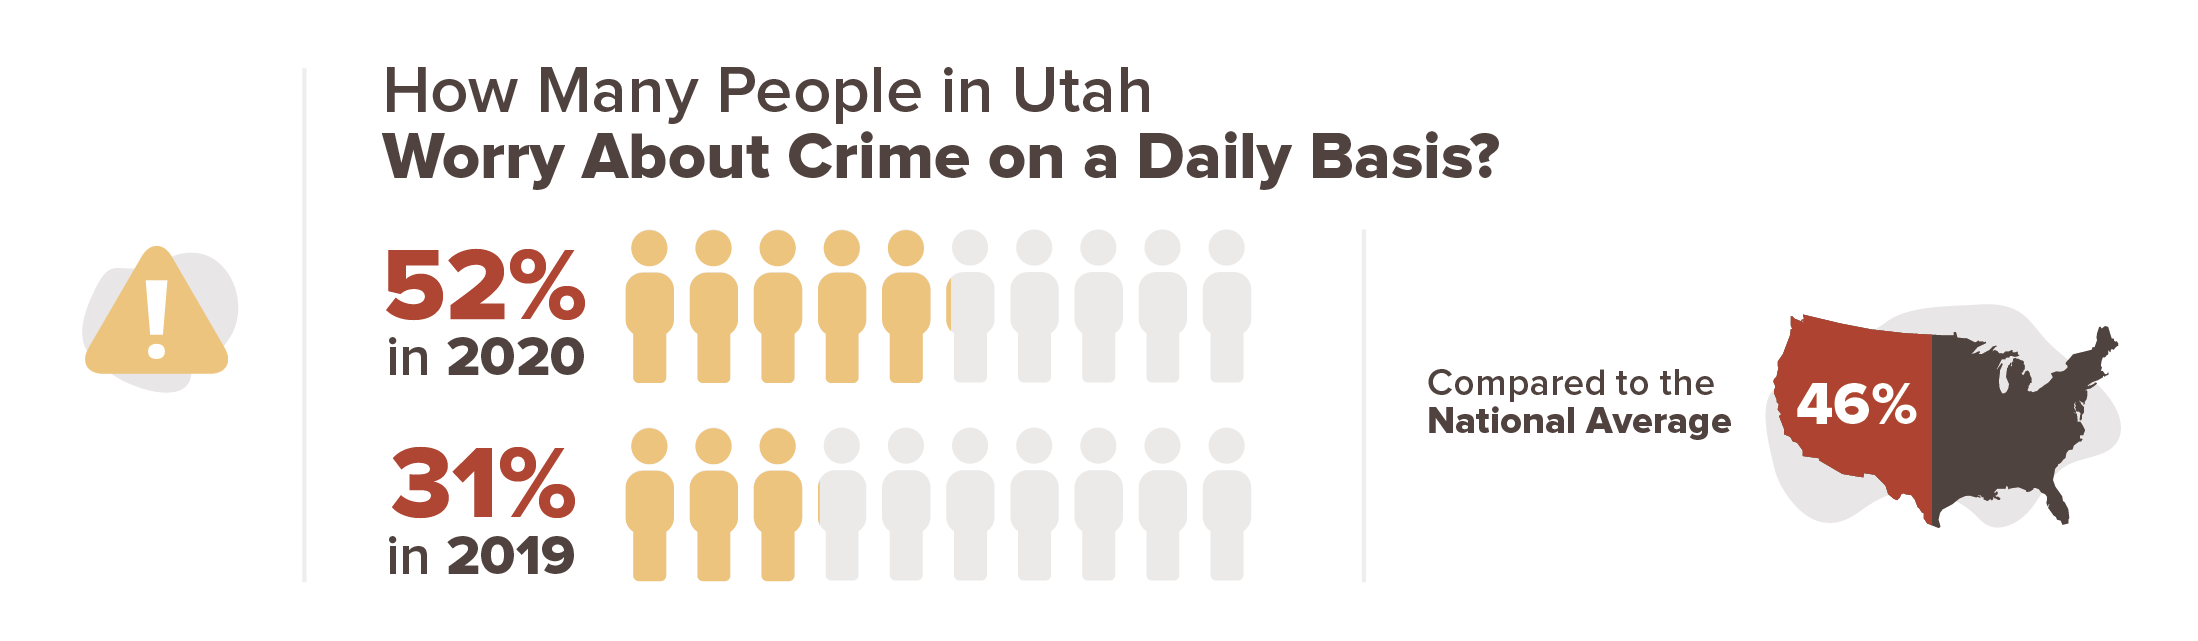 Utah crime concern infographic